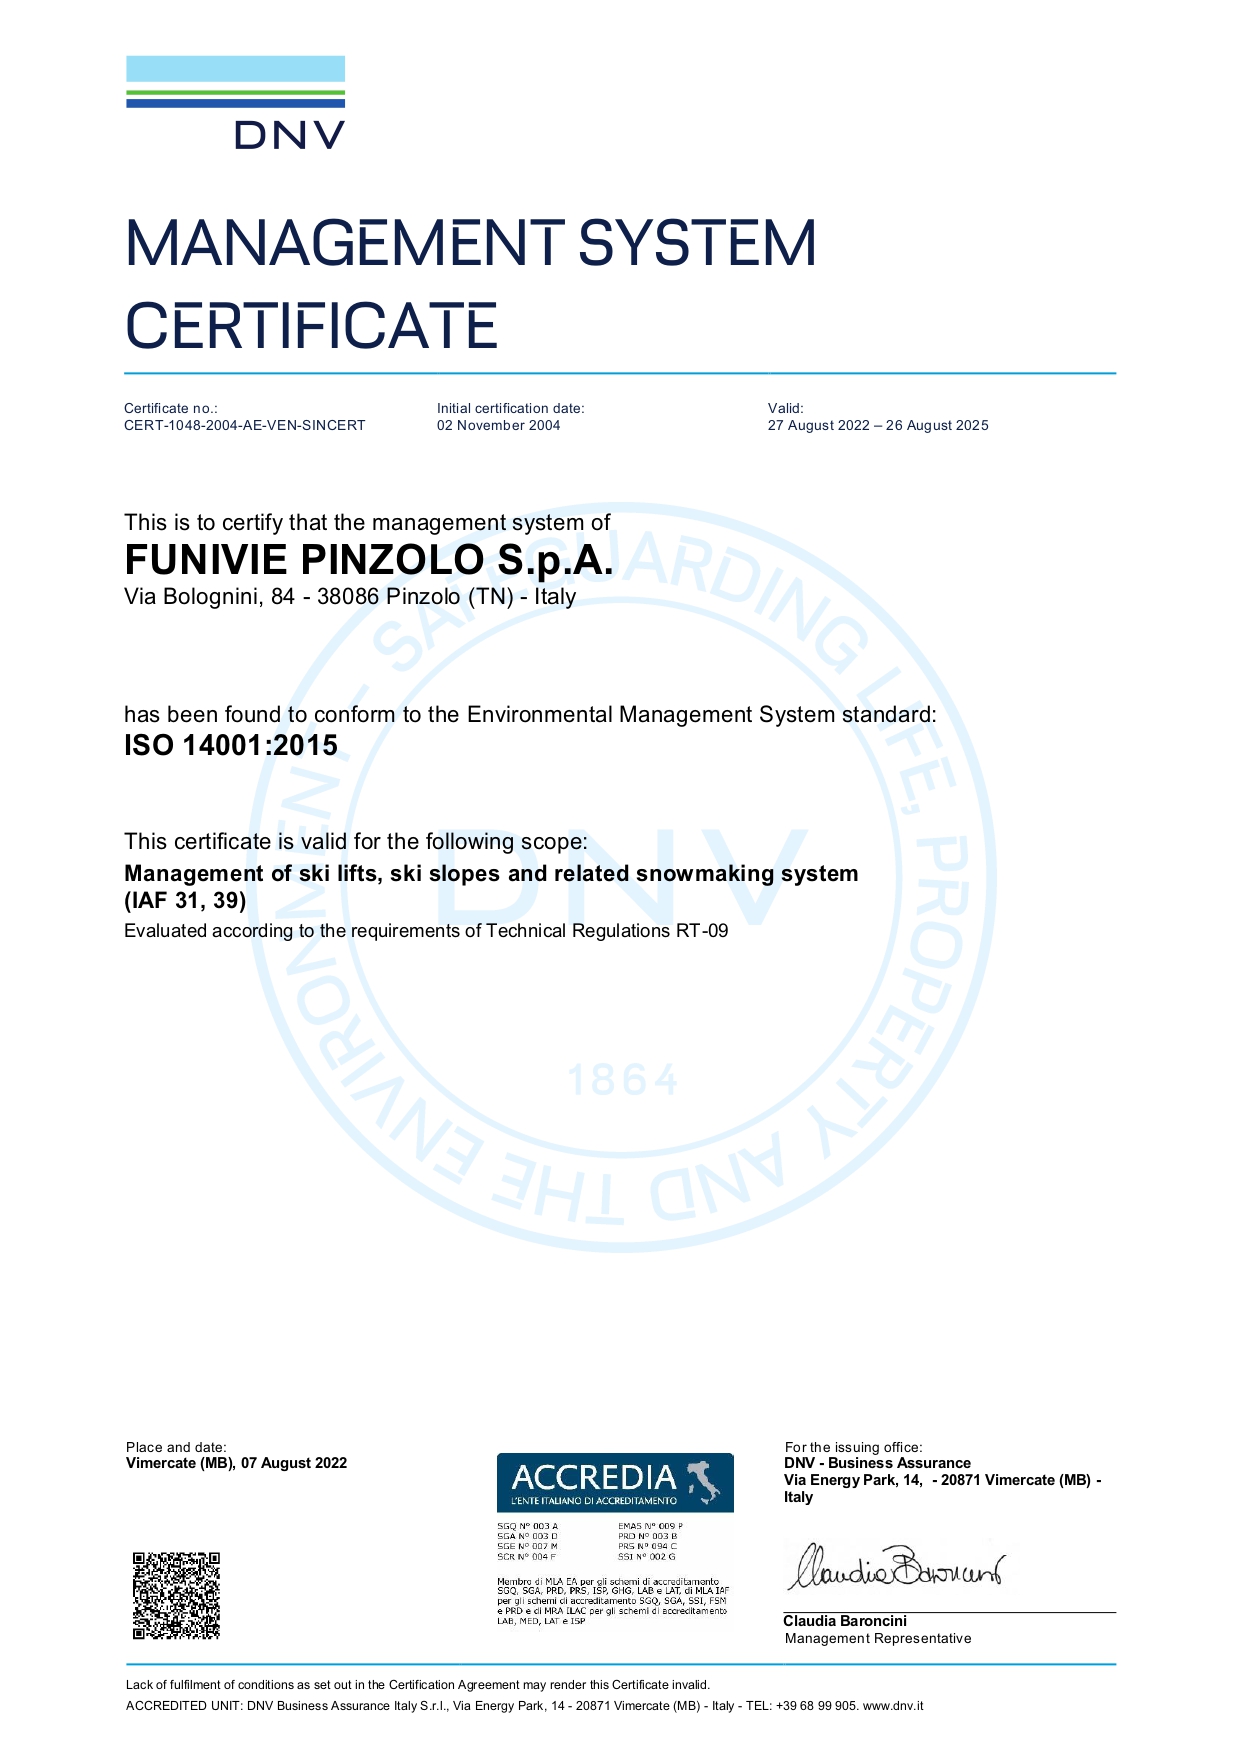 ISO-14001-CERT-1048-2004-AE-VEN-SINCERT-4-en-US-20220807-20220807140333_page-0001.jpg